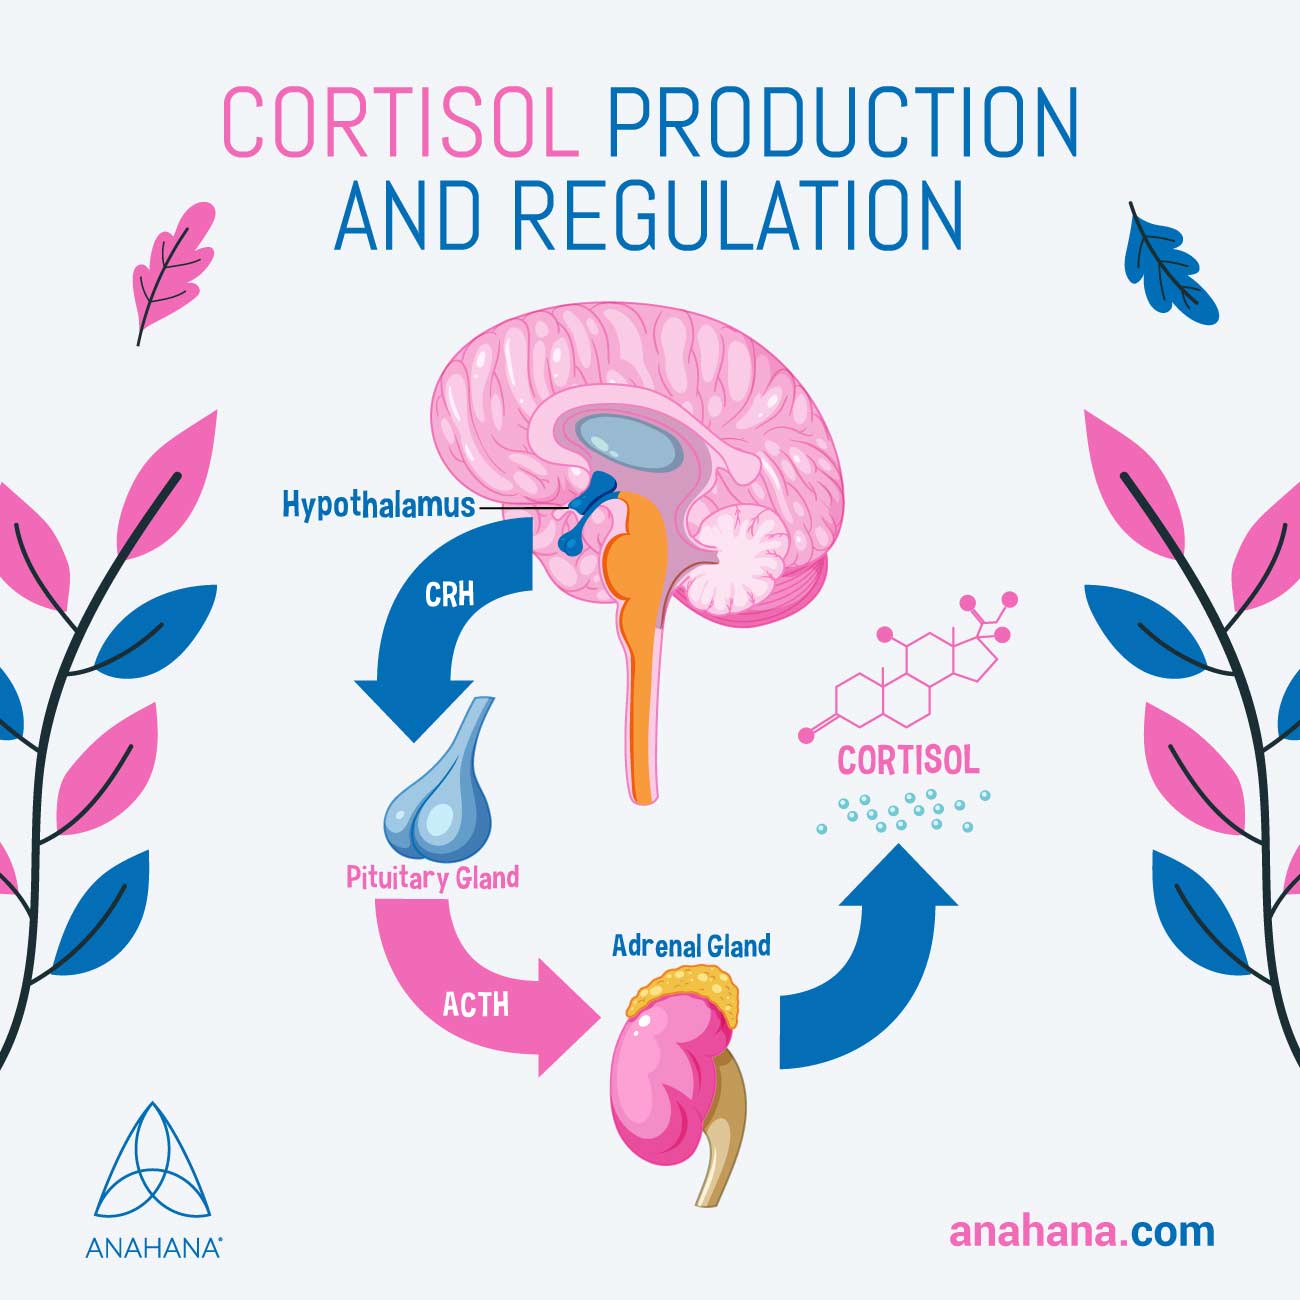 выработка и регуляция кортизола